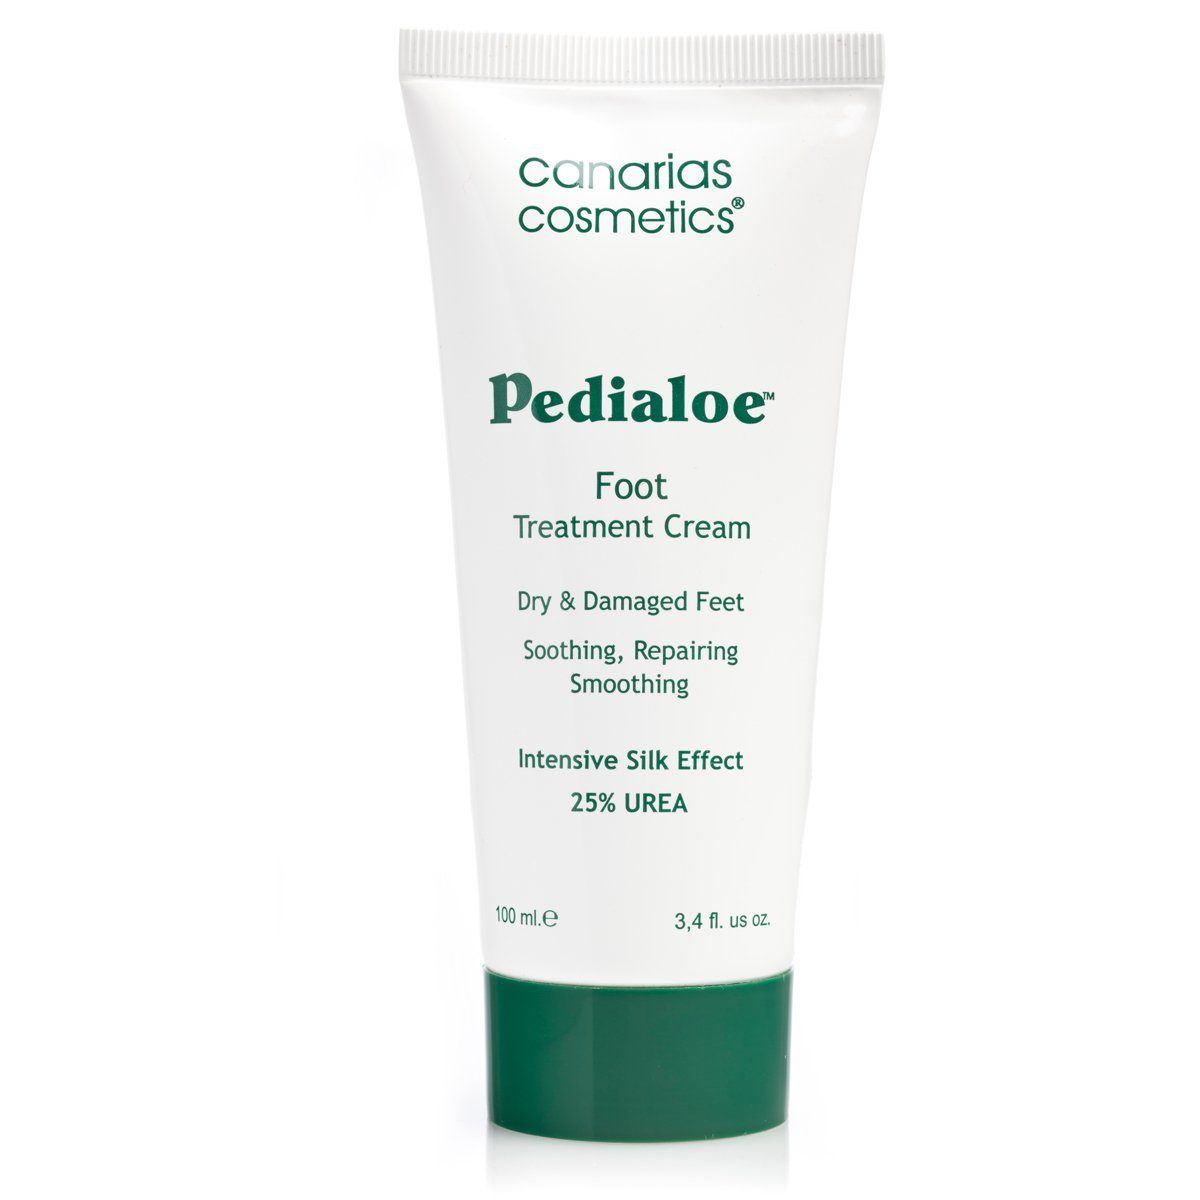 Foot canarias Pedialoe cosmetics Fußcreme ml) Treatment (100 Cream